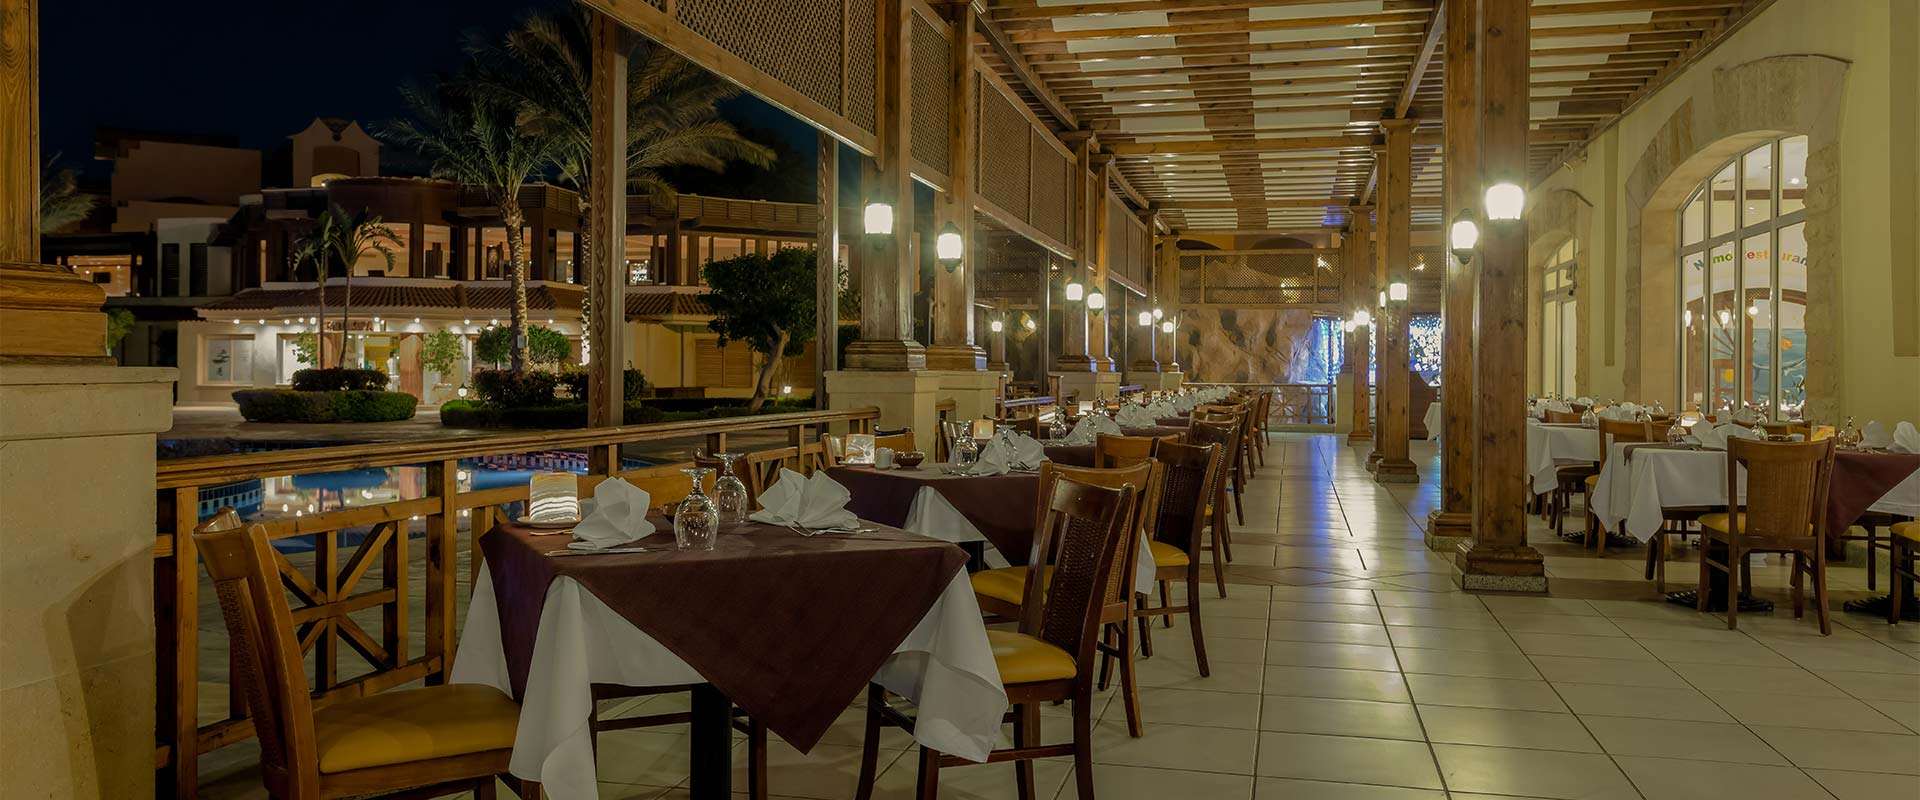 Main Restaurant -Terrace Area